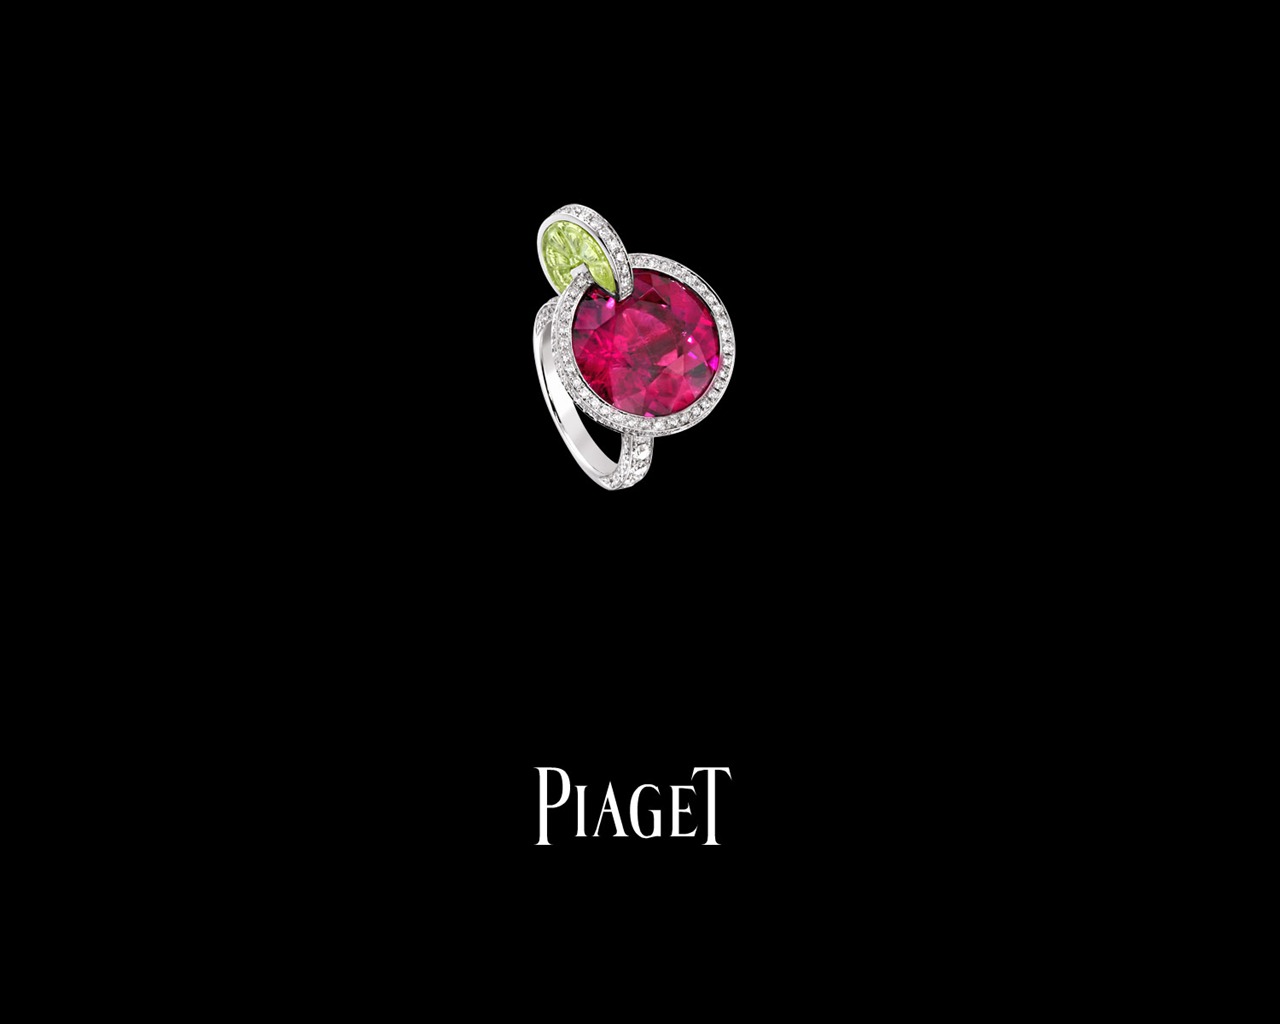 Piaget diamond jewelry wallpaper (4) #20 - 1280x1024